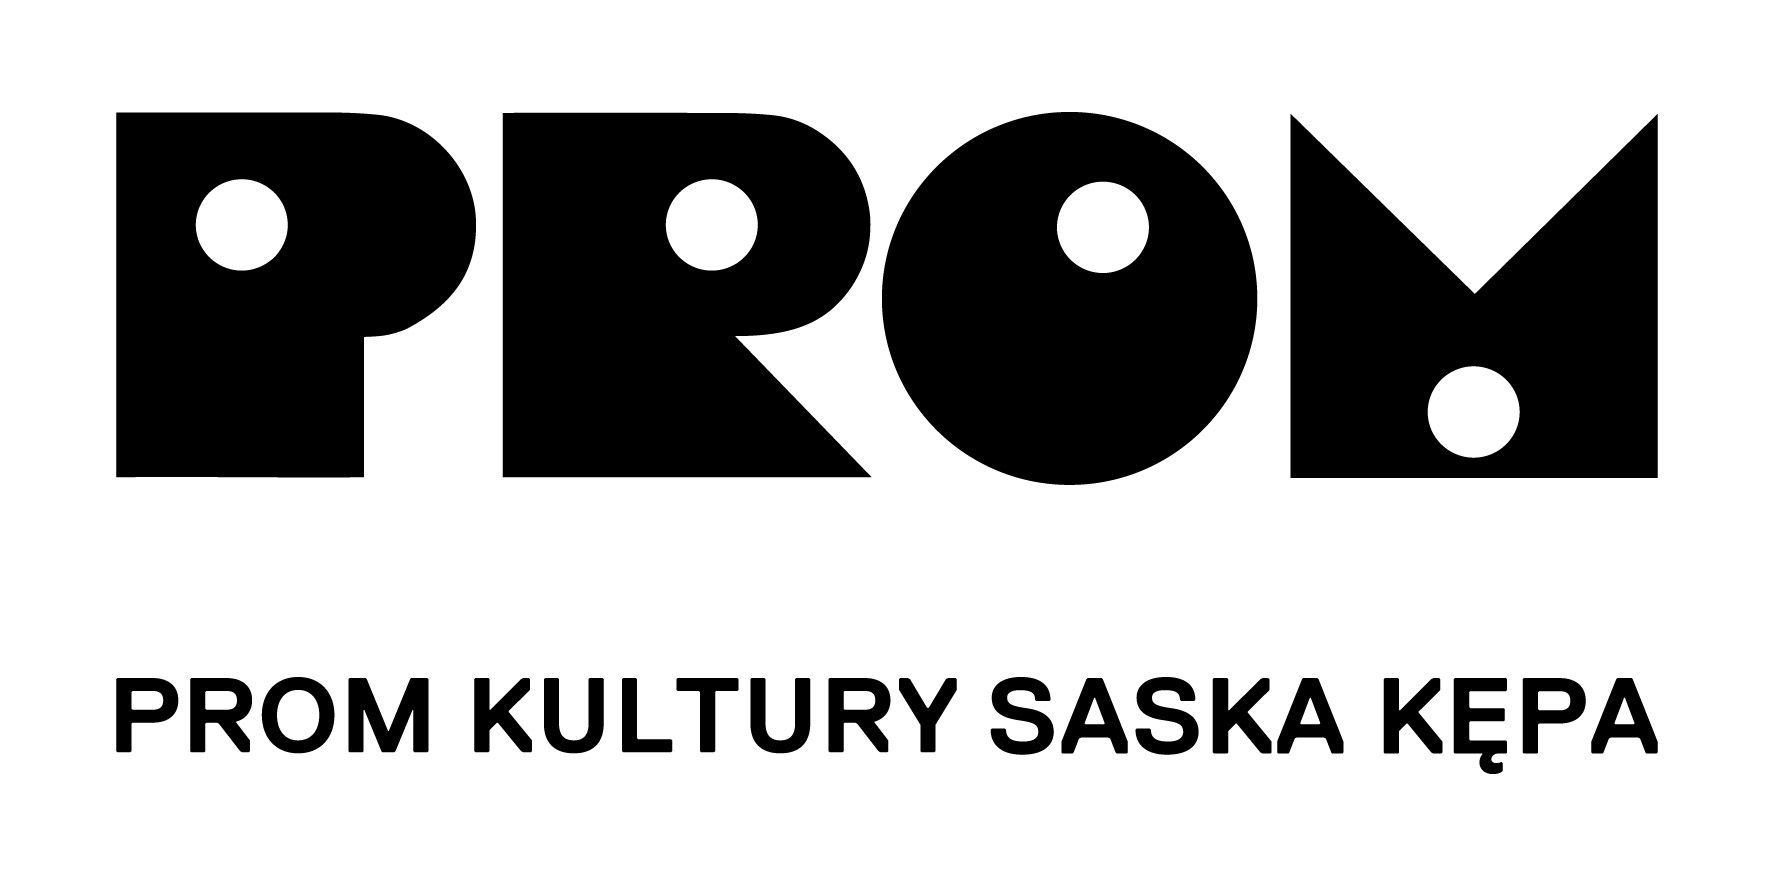 prom_logo